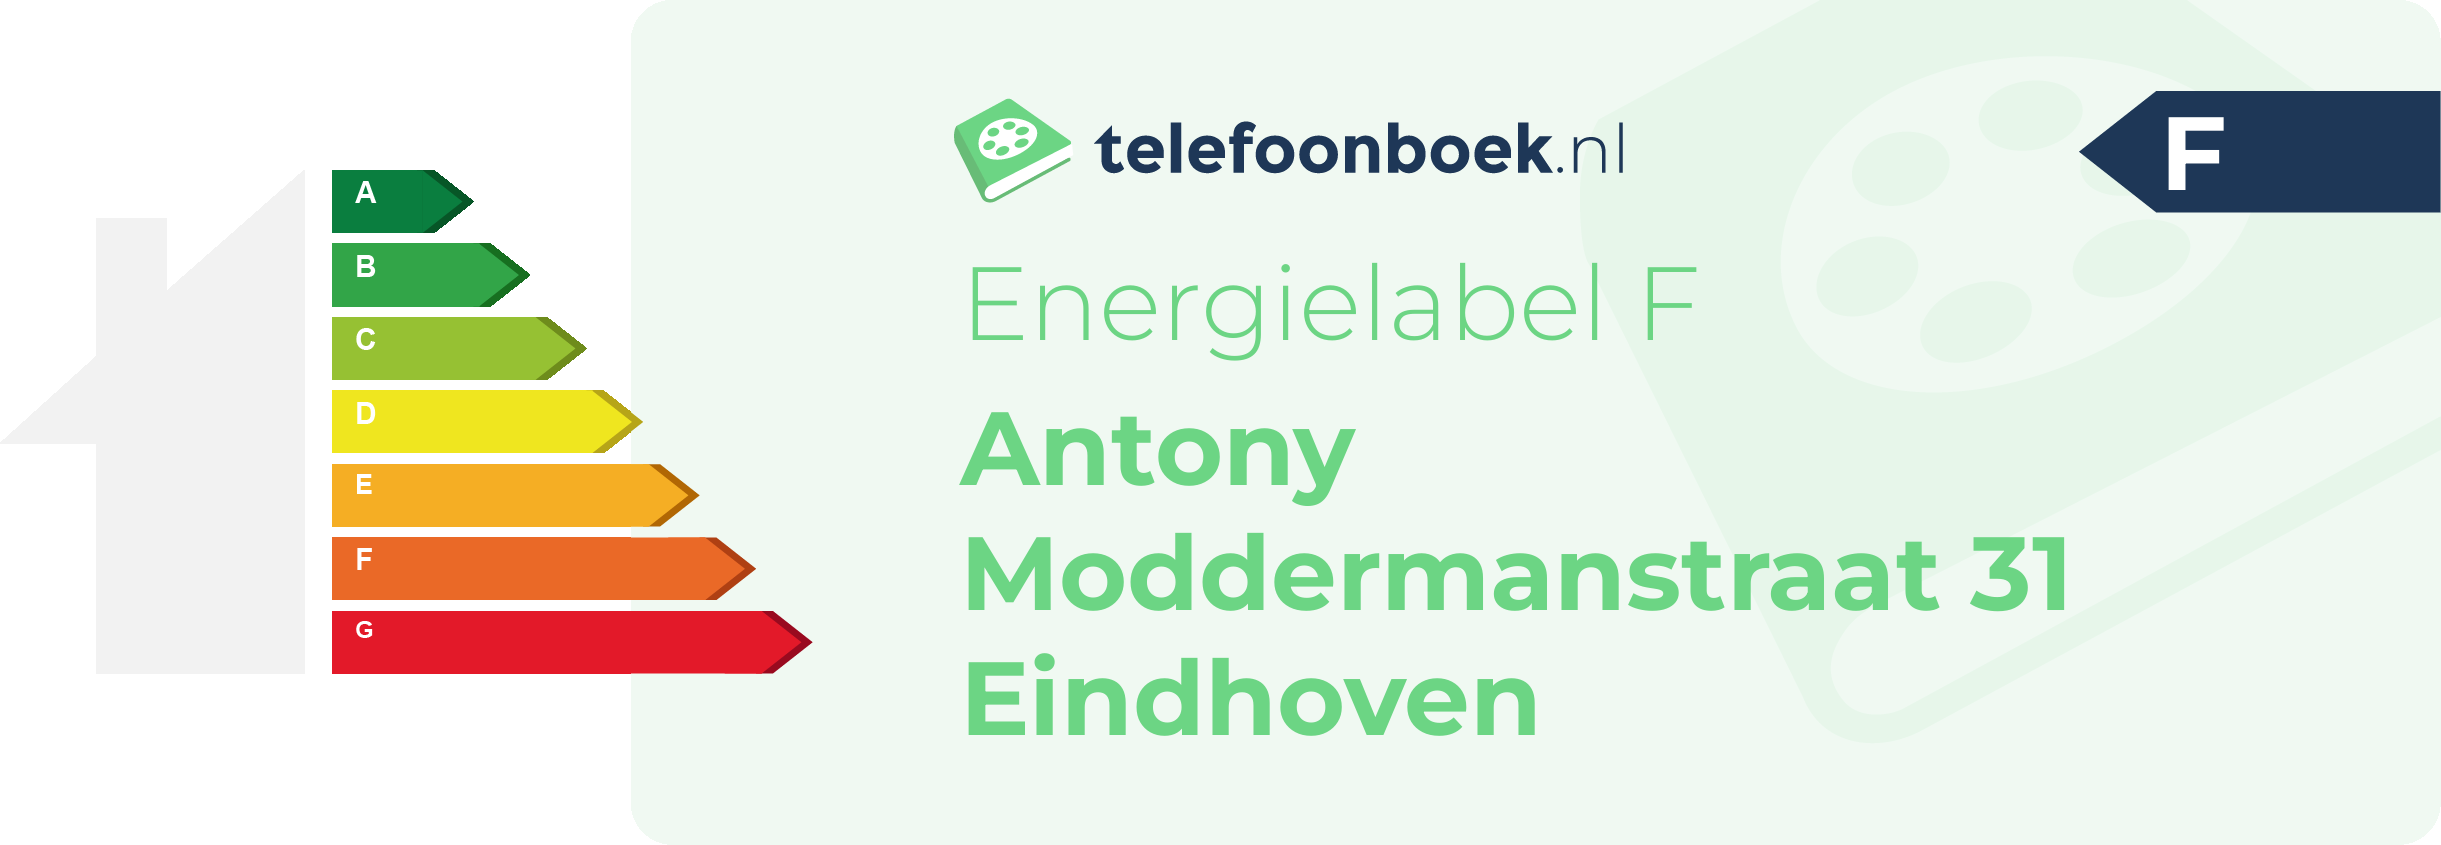 Energielabel Antony Moddermanstraat 31 Eindhoven